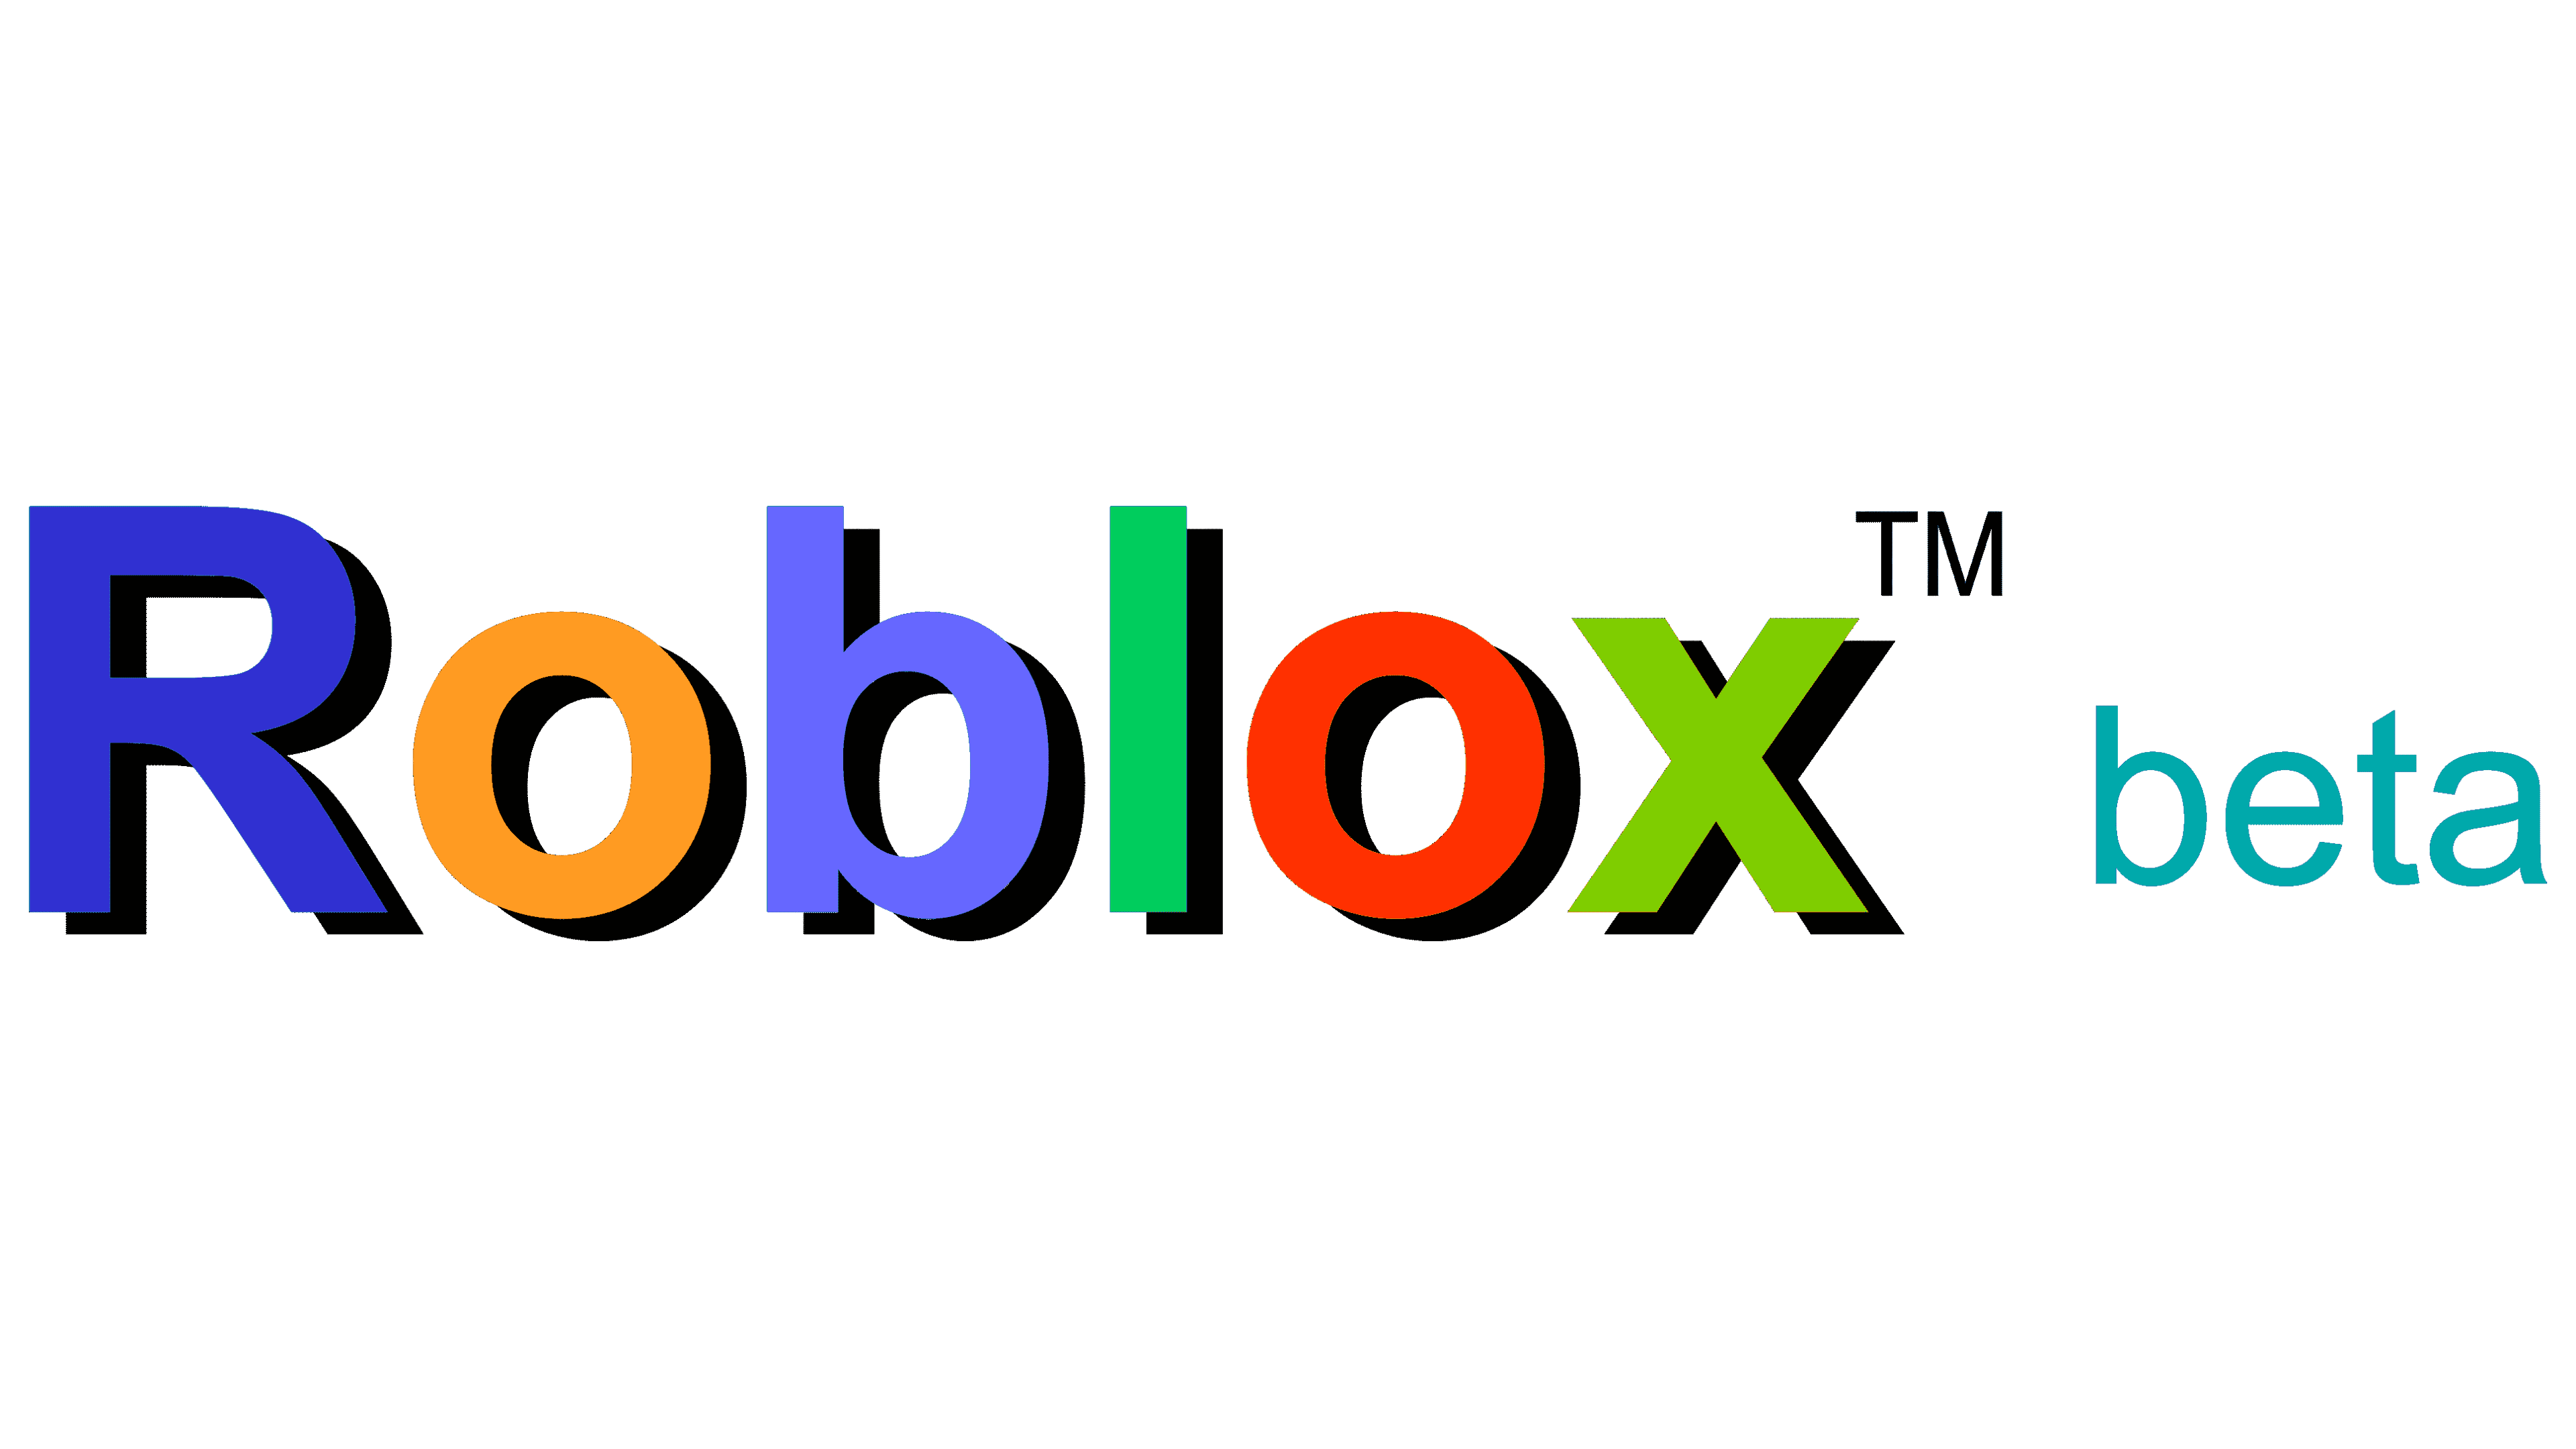 evolution logo roblox 1989-2023